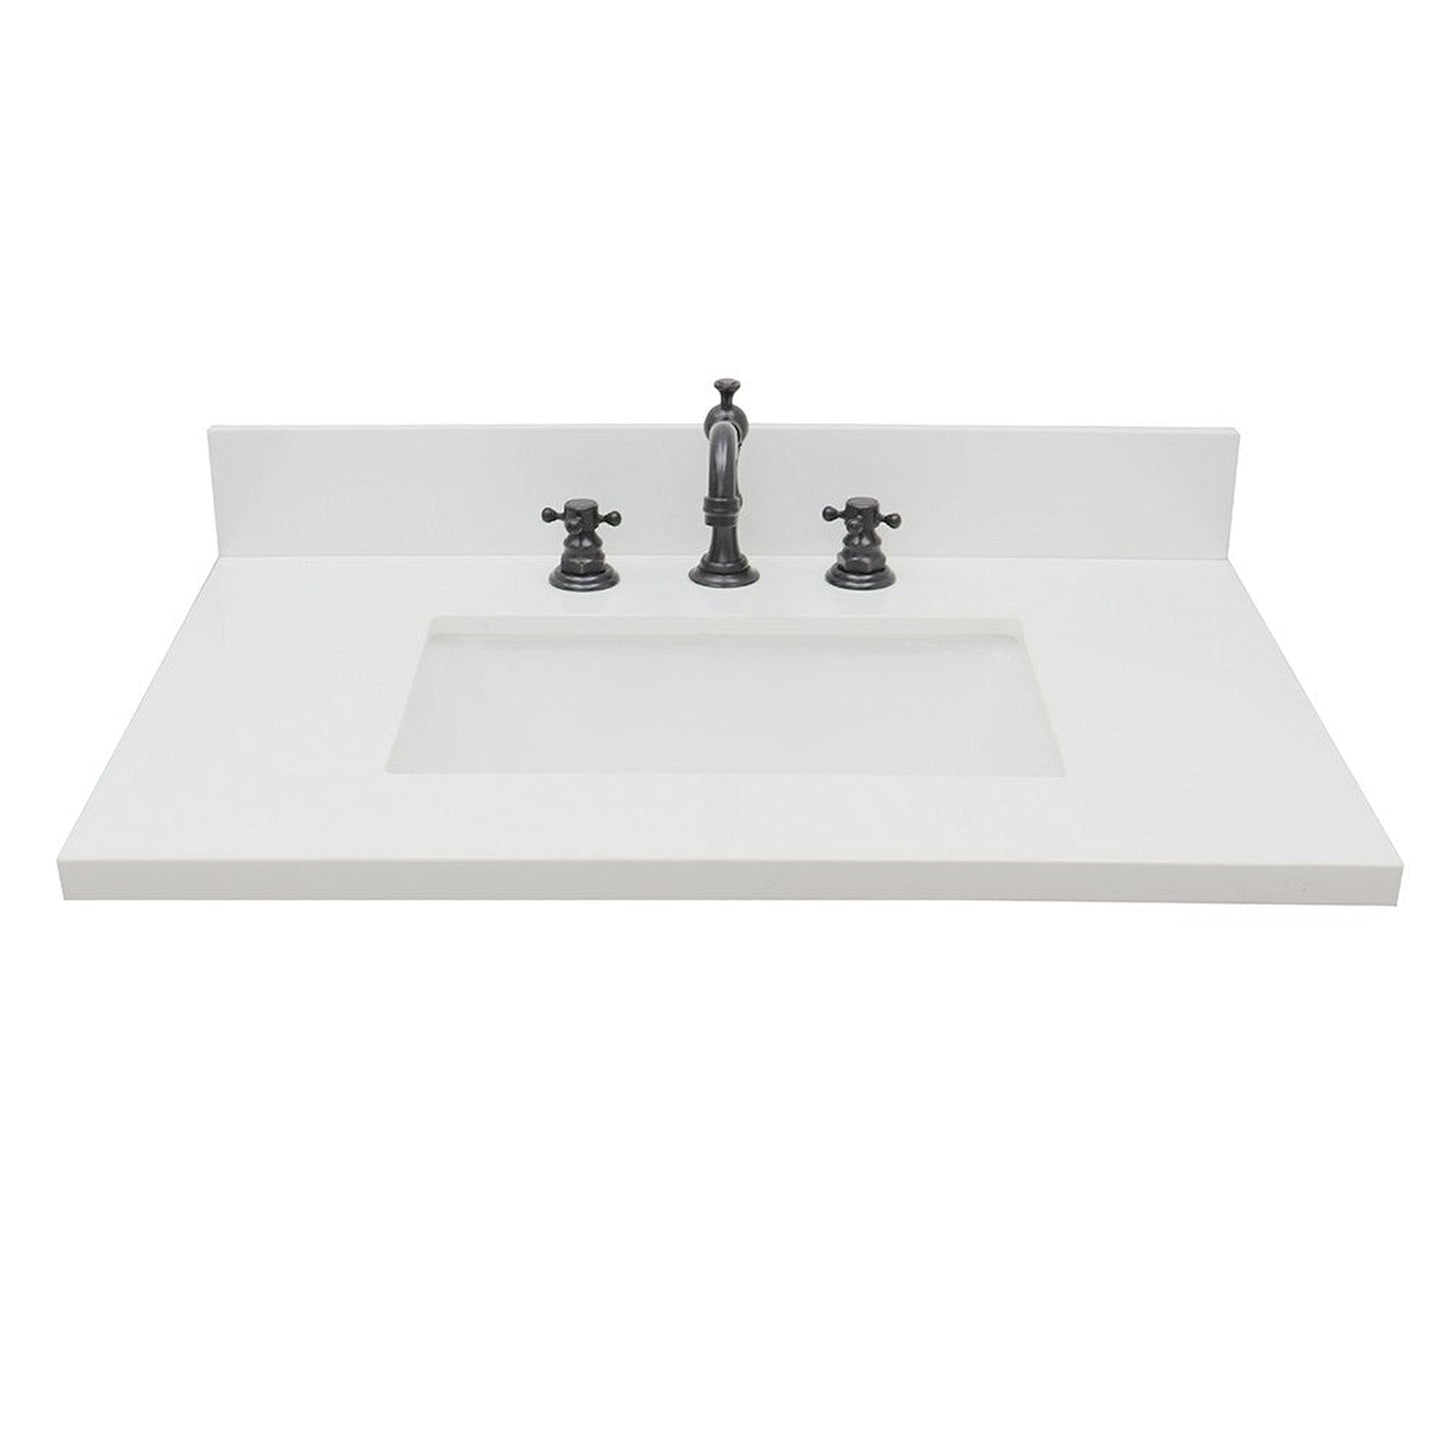 Bellaterra Home 31" x 22" White Quartz Three Hole Vanity Top With Undermount Rectangular Sink and Overflow